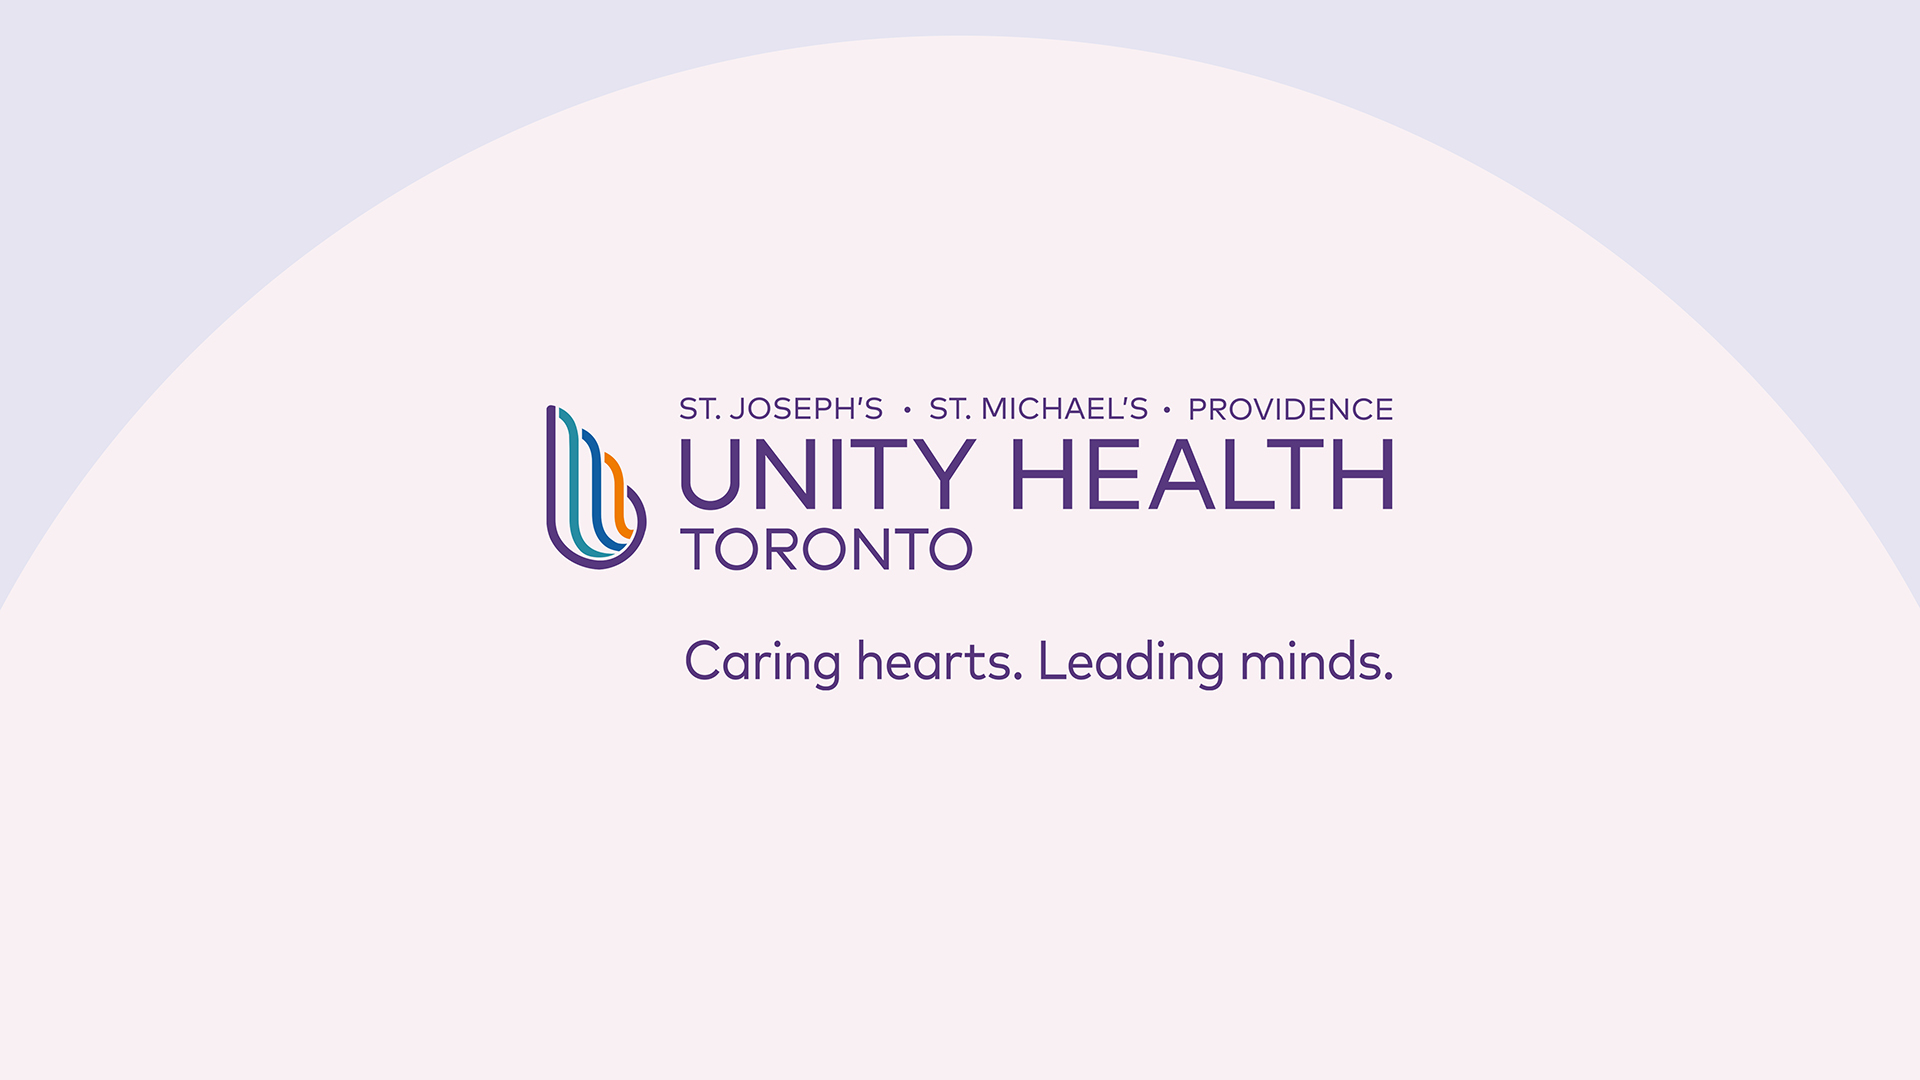 Unity health in health featured  1920x1080.jpg